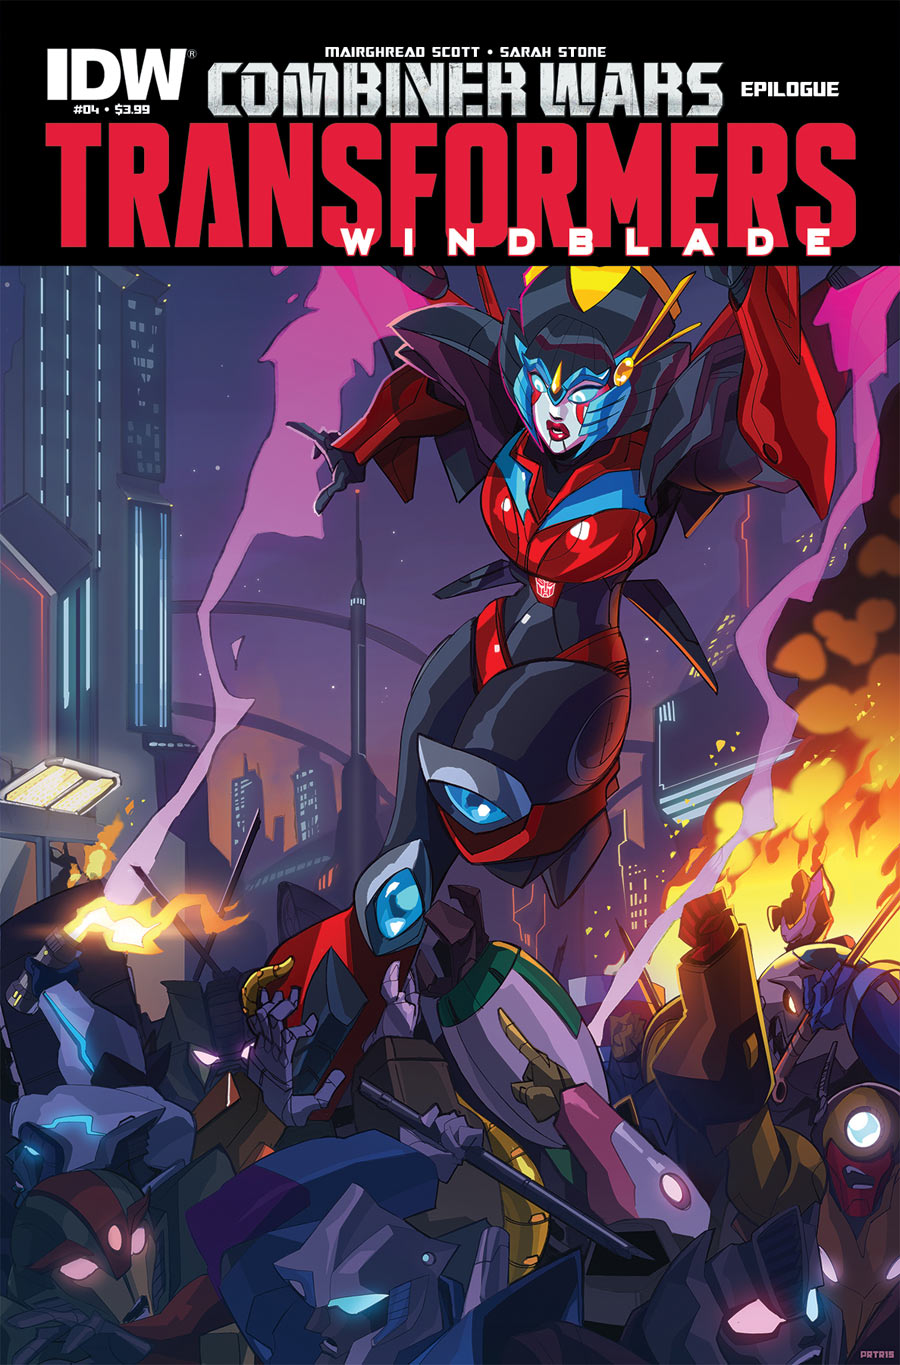 Transformers: Windblade #4—Combiner Wars Epilogue